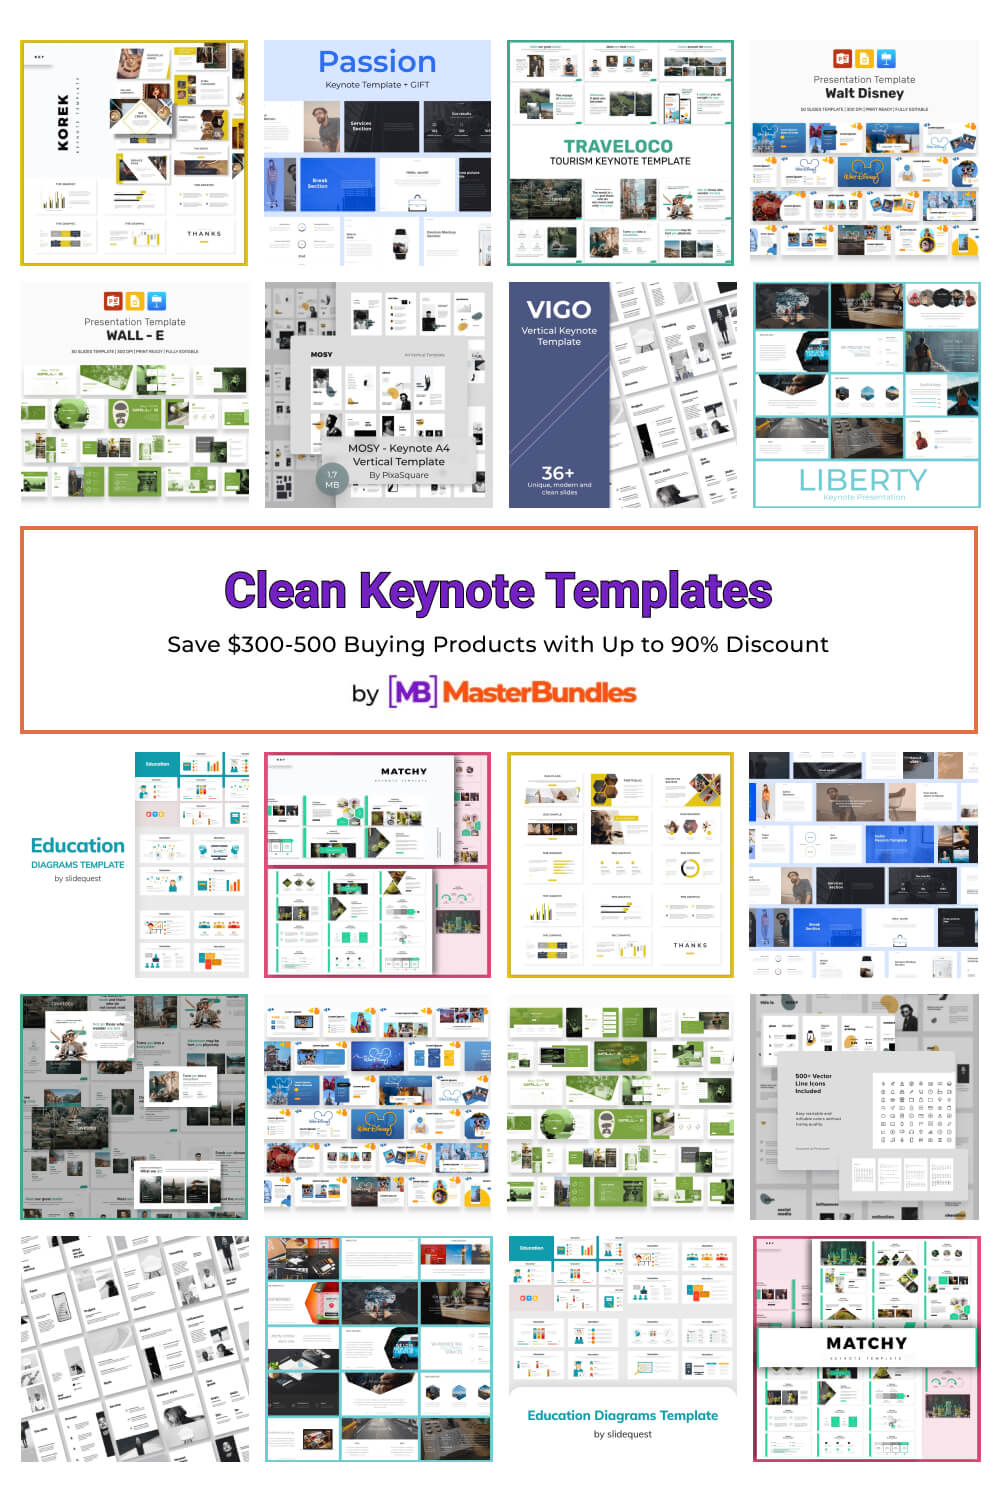 clean keynote templates pinterest image.